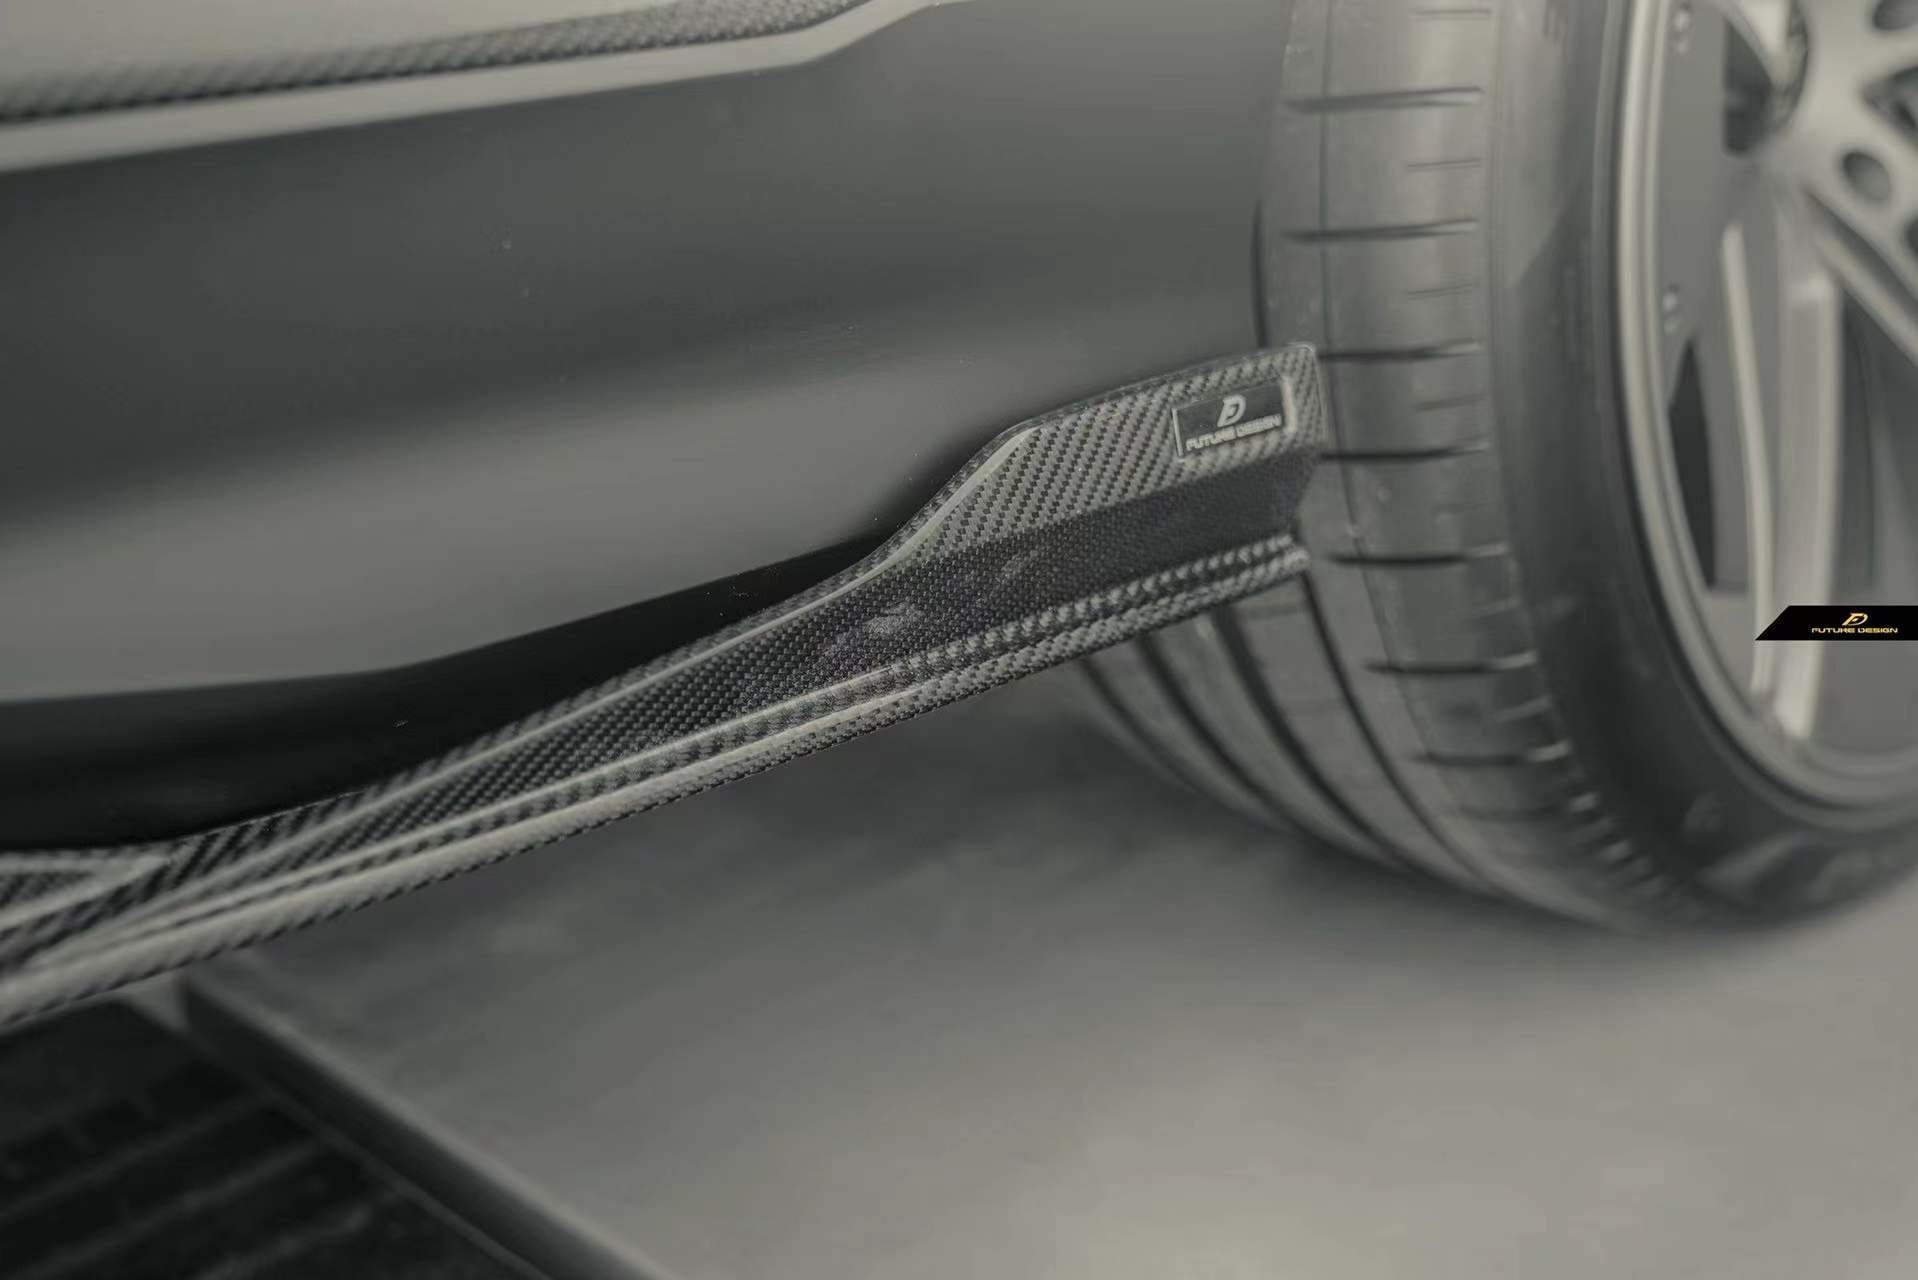 Future Design FD Carbon Fiber SIDE SKIRTS for Lamborghini Urus